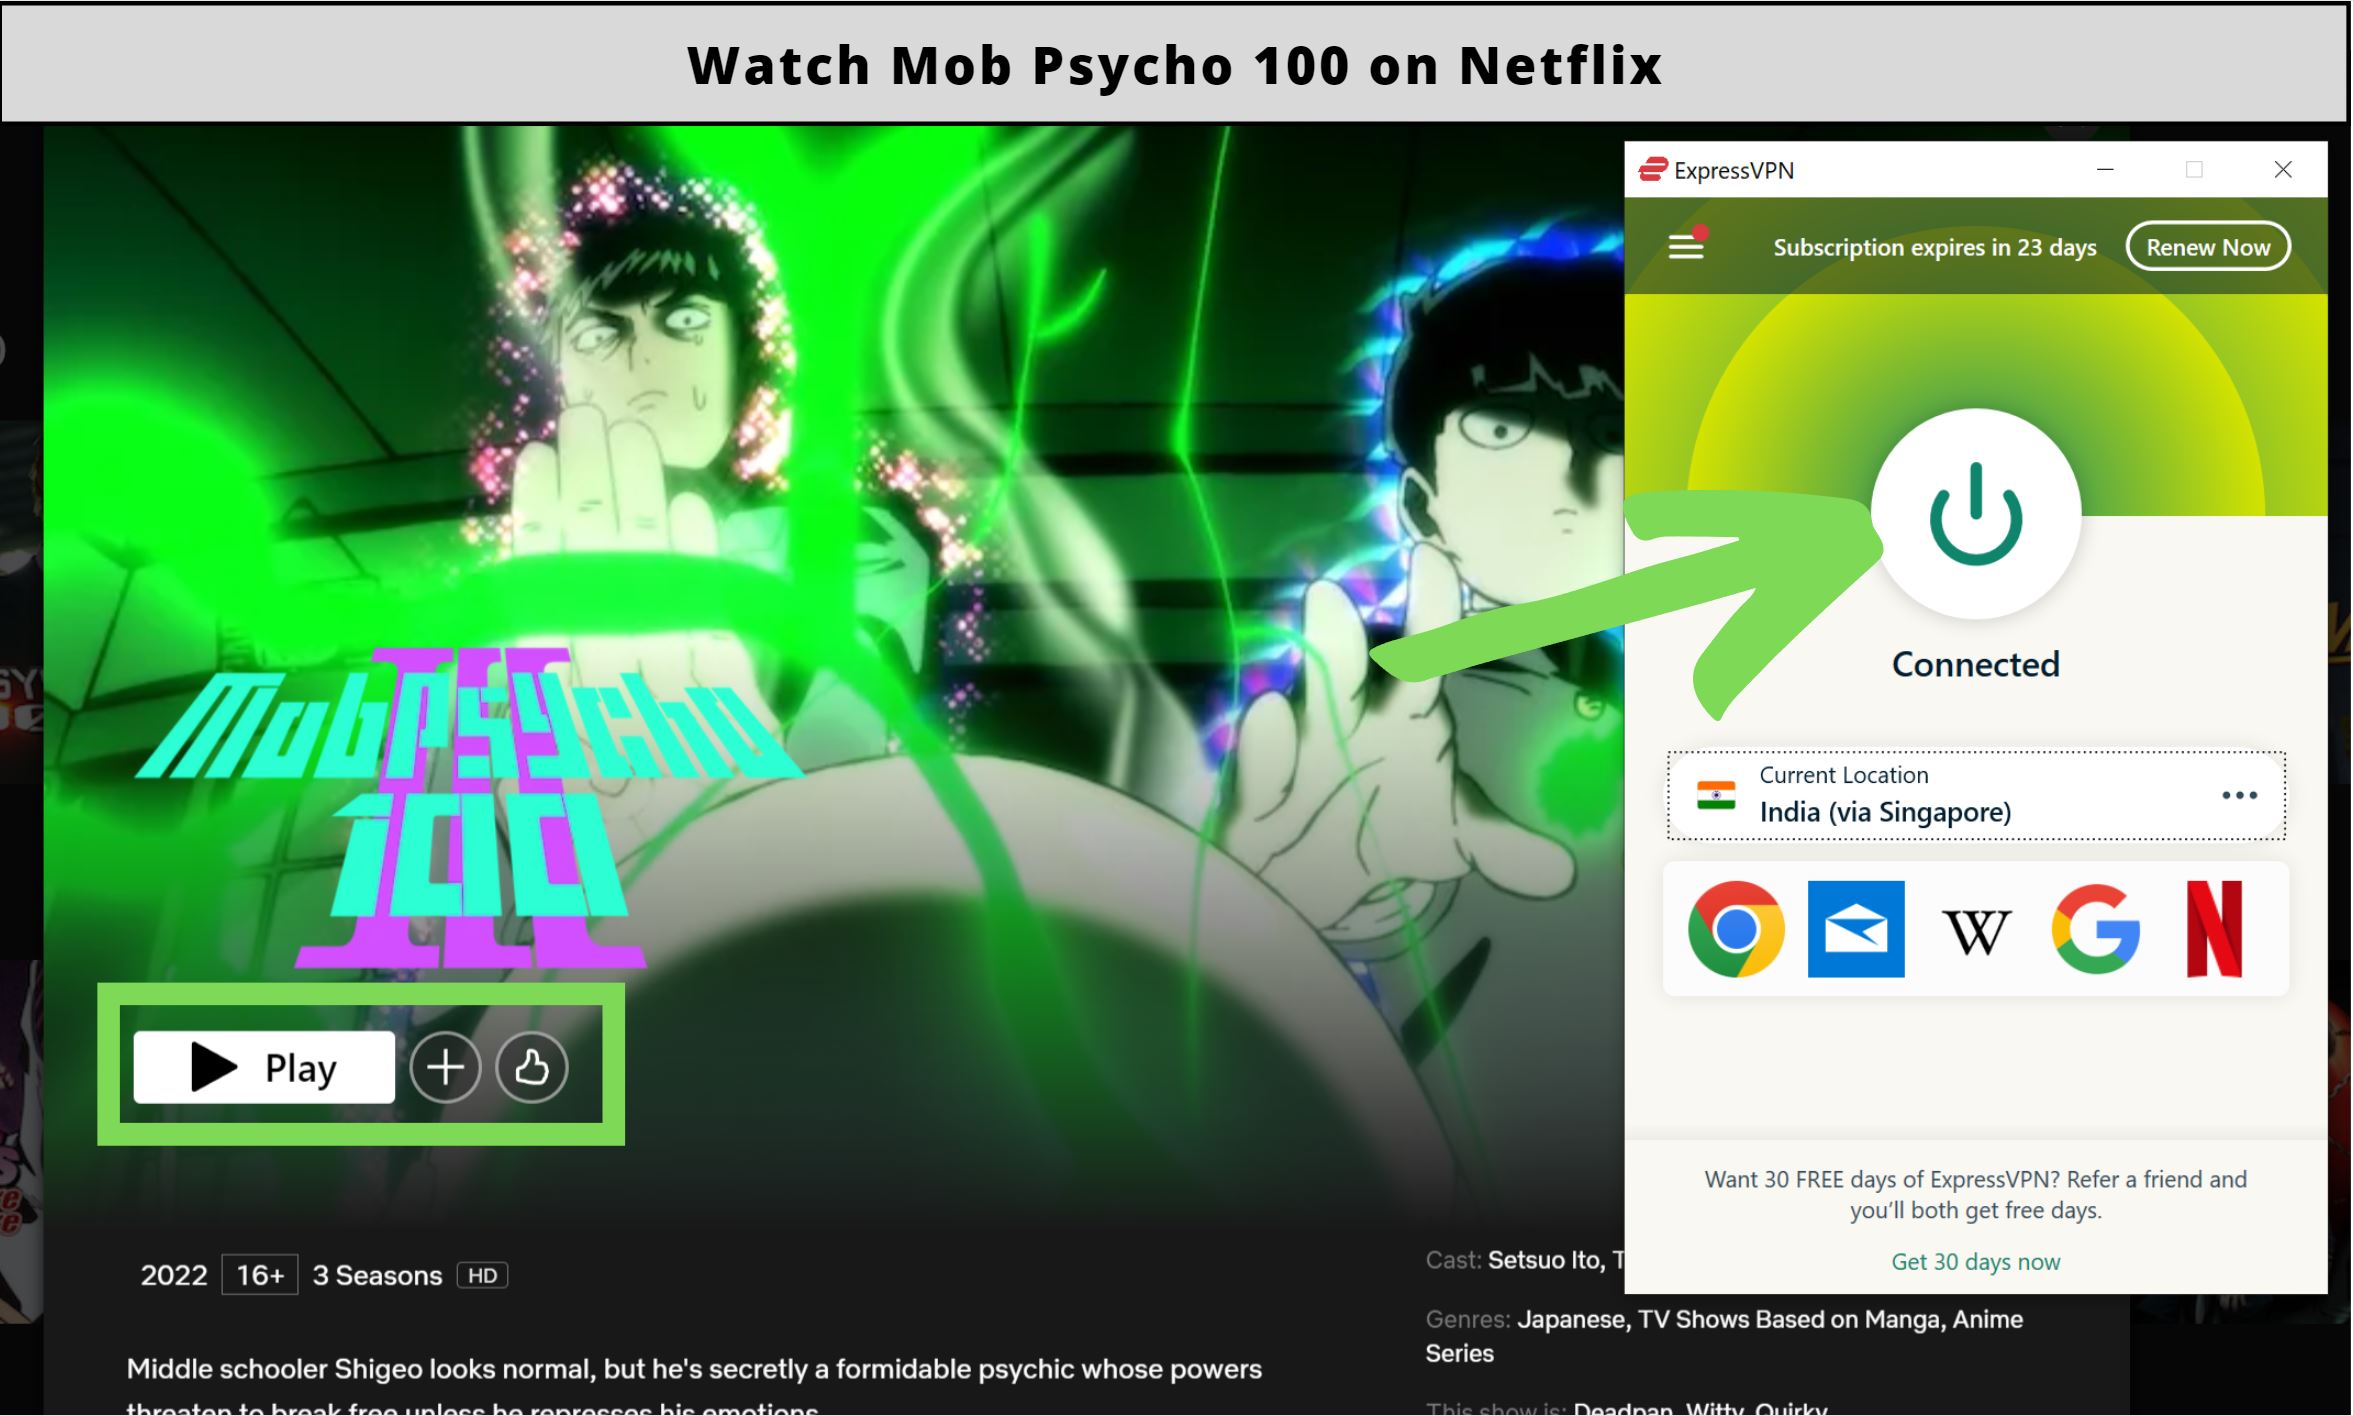 Is Mob Psycho 100 on Netflix?